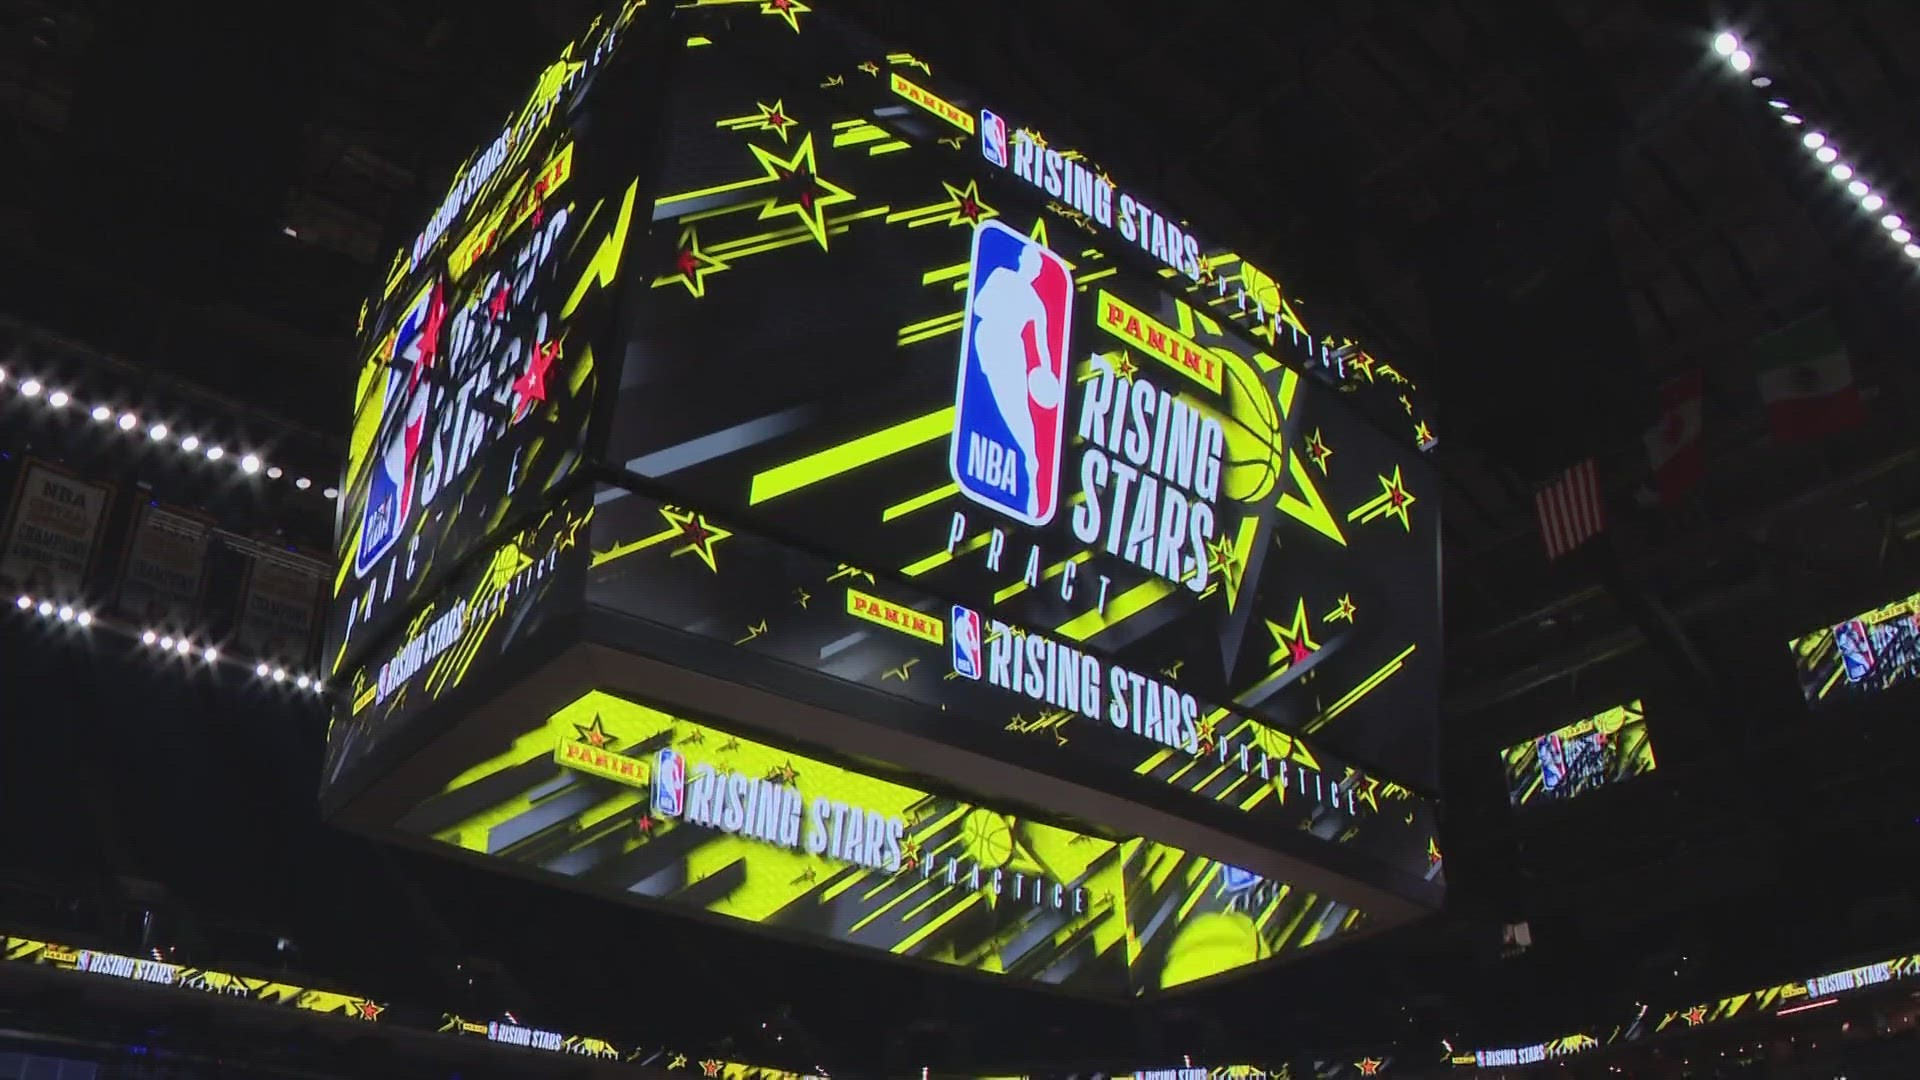 13Sports reporter Dominic Miranda previews the NBA Rising Stars Game.